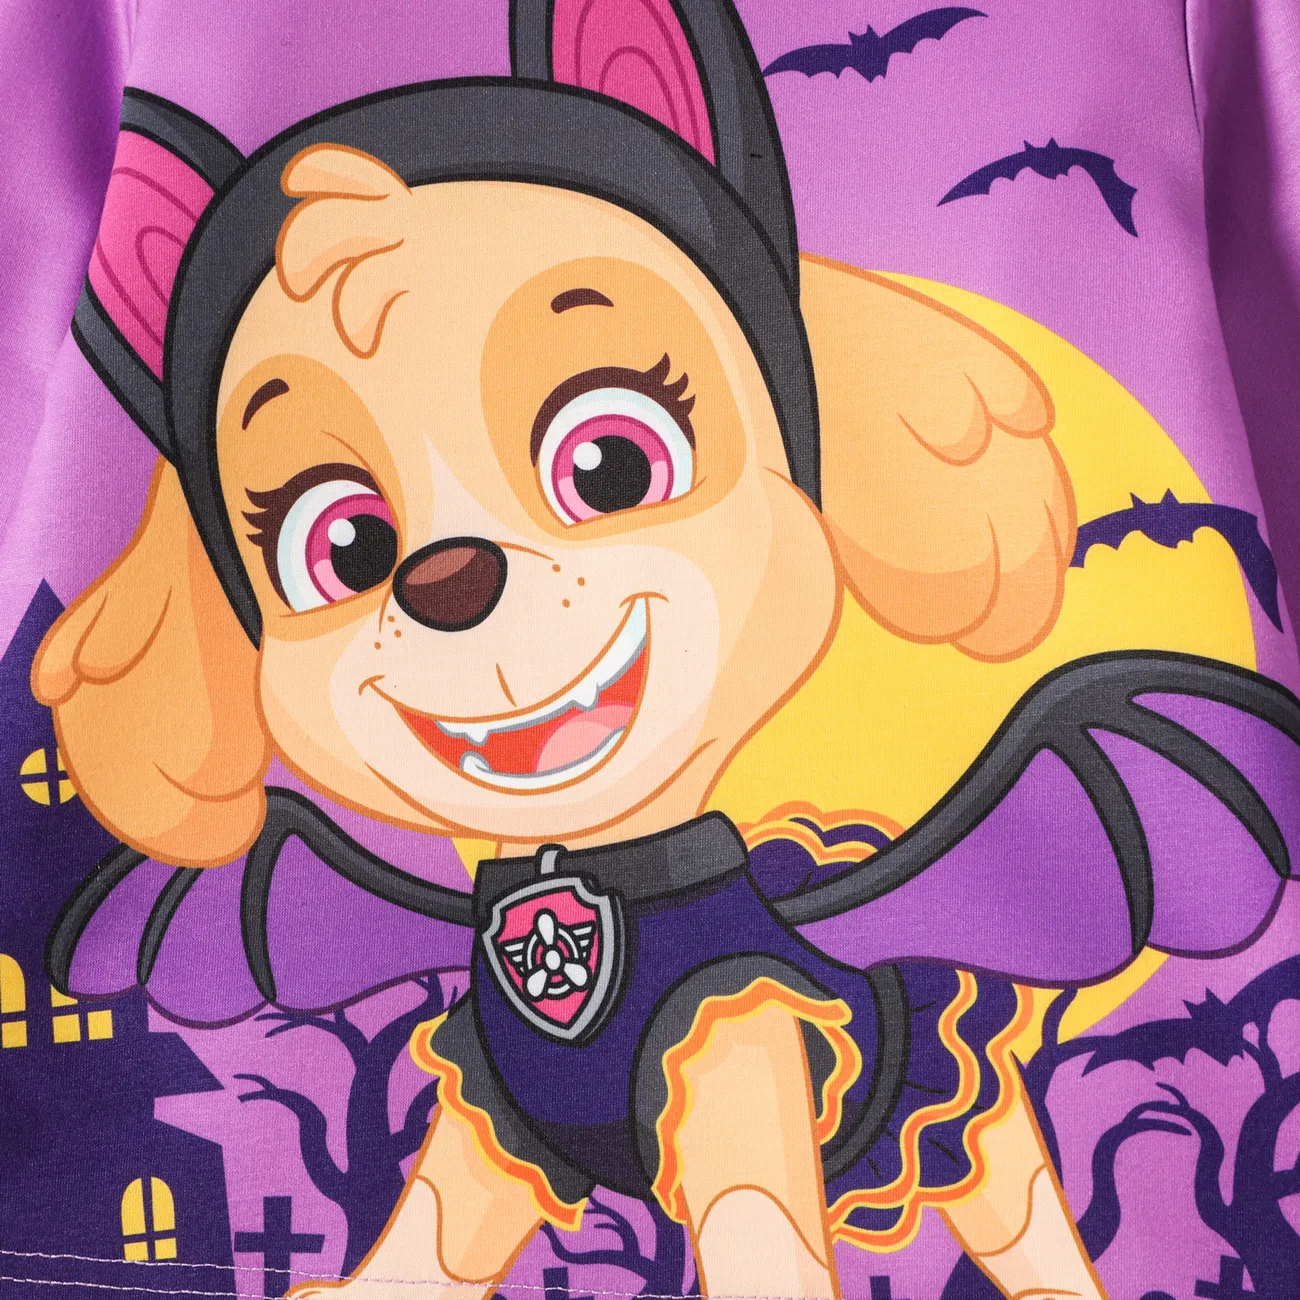 La Pat’ Patrouille Halloween Enfant en bas âge Fille Hypersensible Enfantin Chien Sweat-shirt Violet big image 1